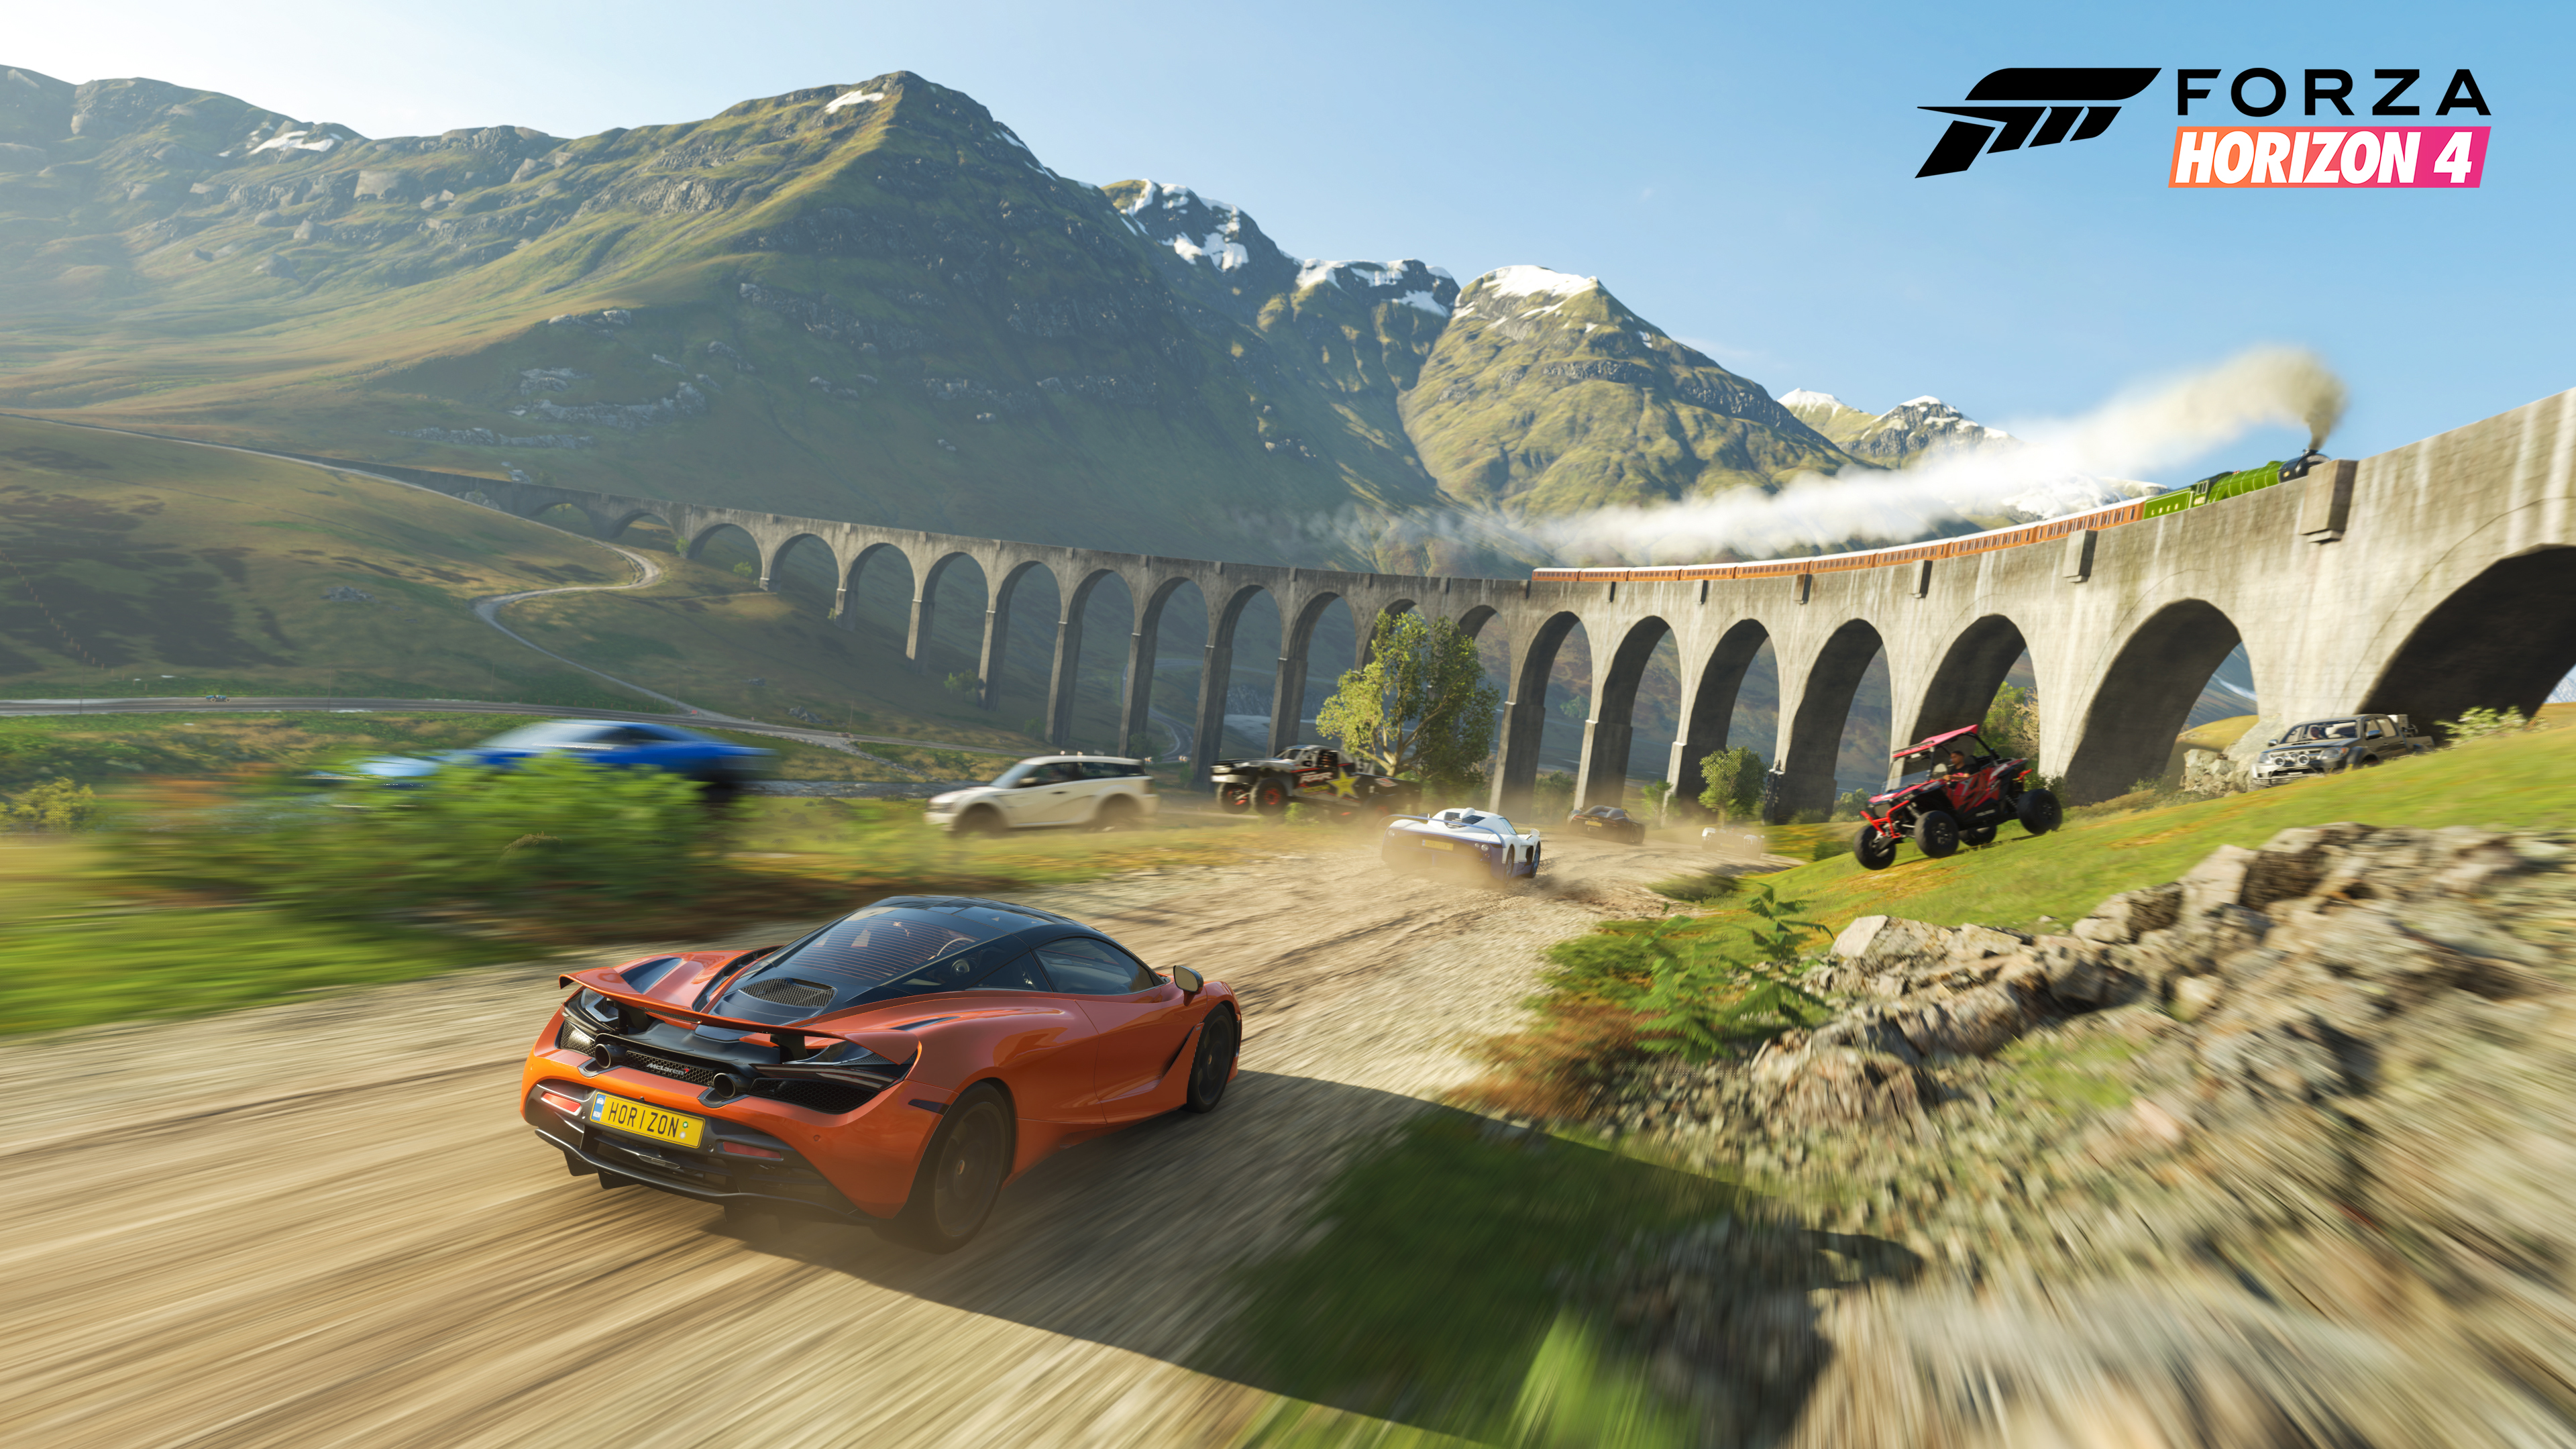 General 3840x2160 Forza Horizon 4 video games car McLaren 720S motion blur licence plates logo path train mountains